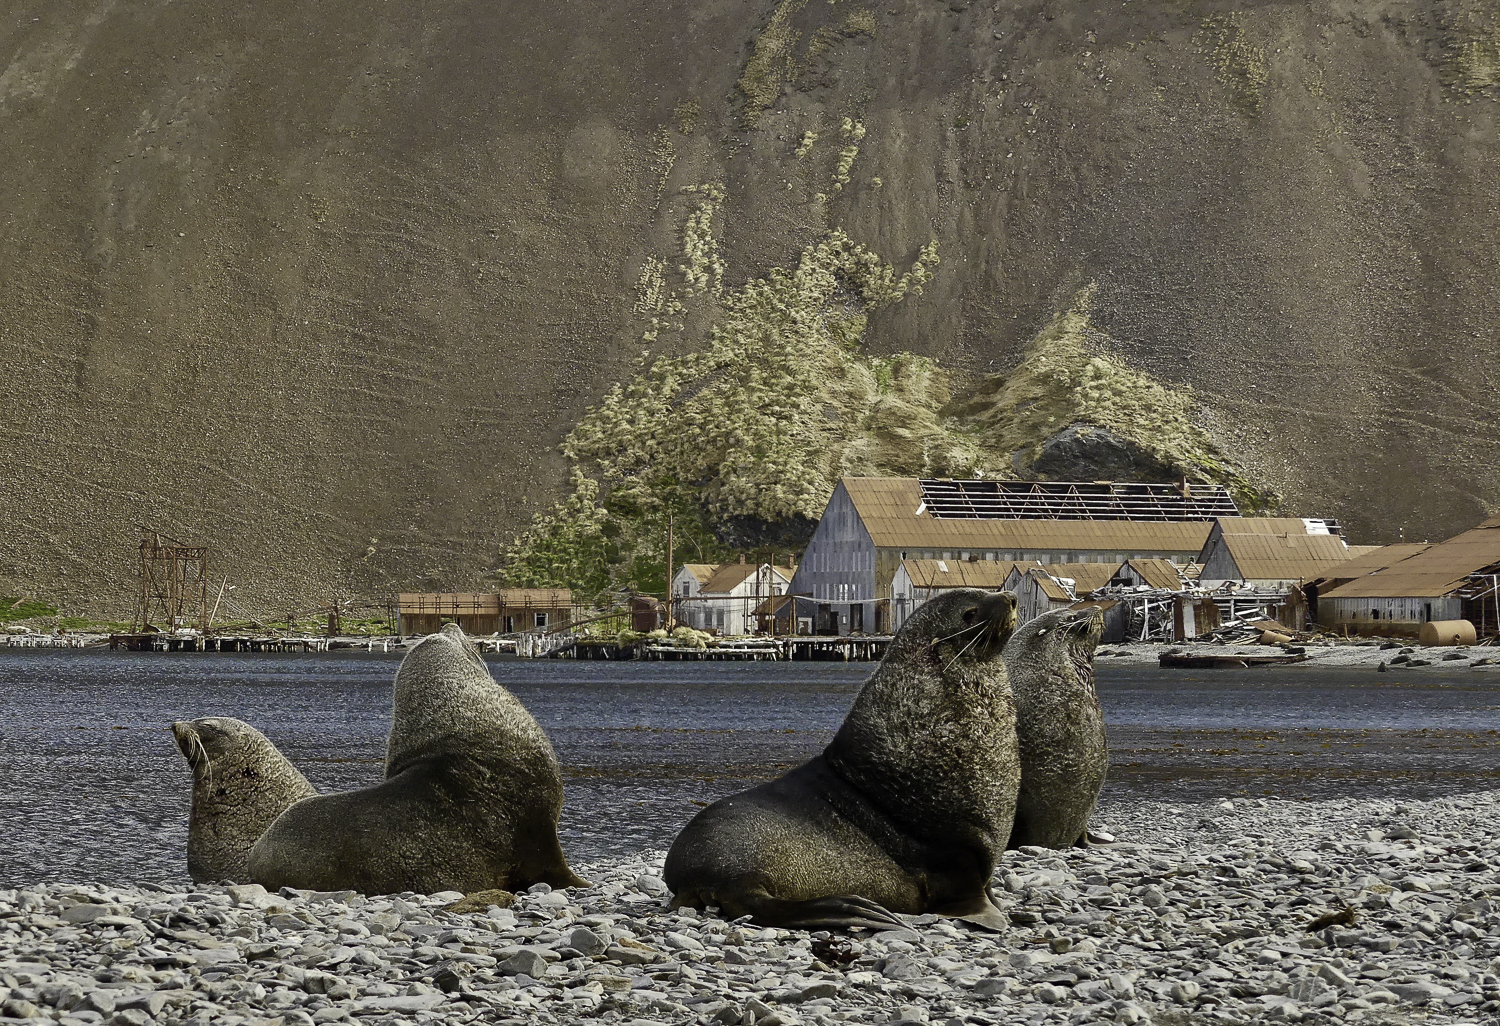 ePostcard #56: Antarctic Fur Seals (South Georgia)